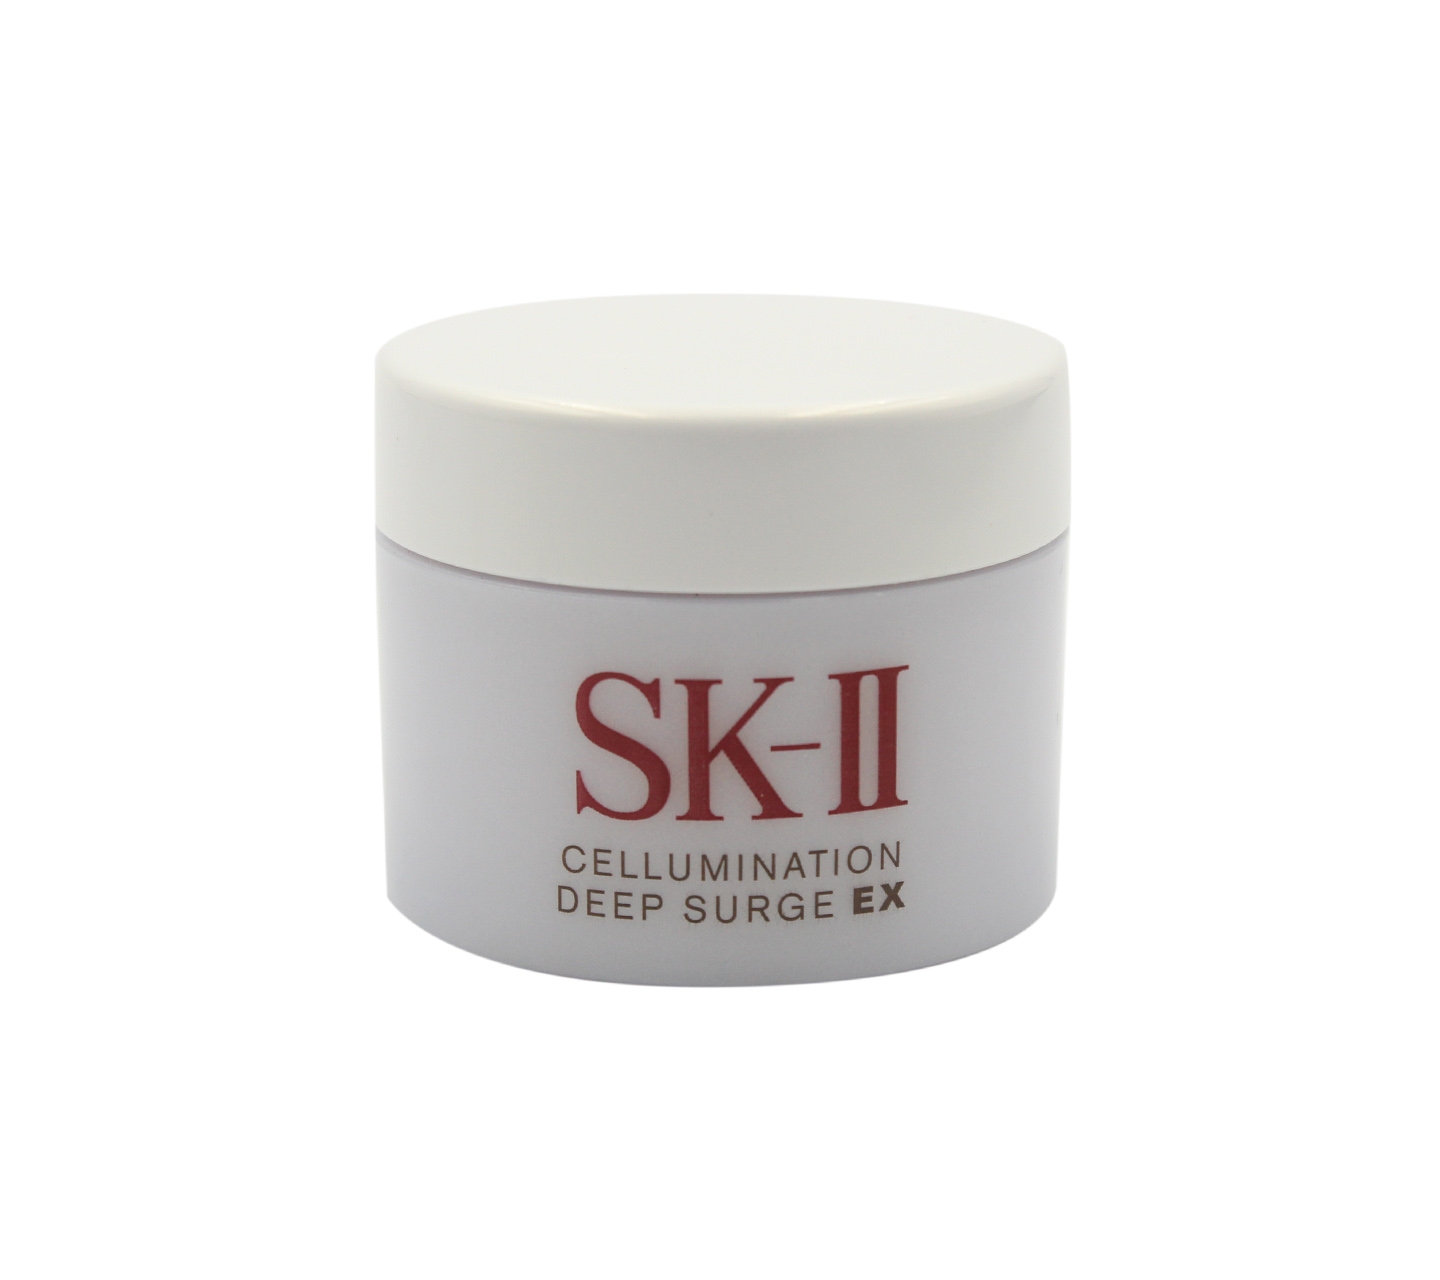 Sk II Cellumination Deep Surge EX Skin Care